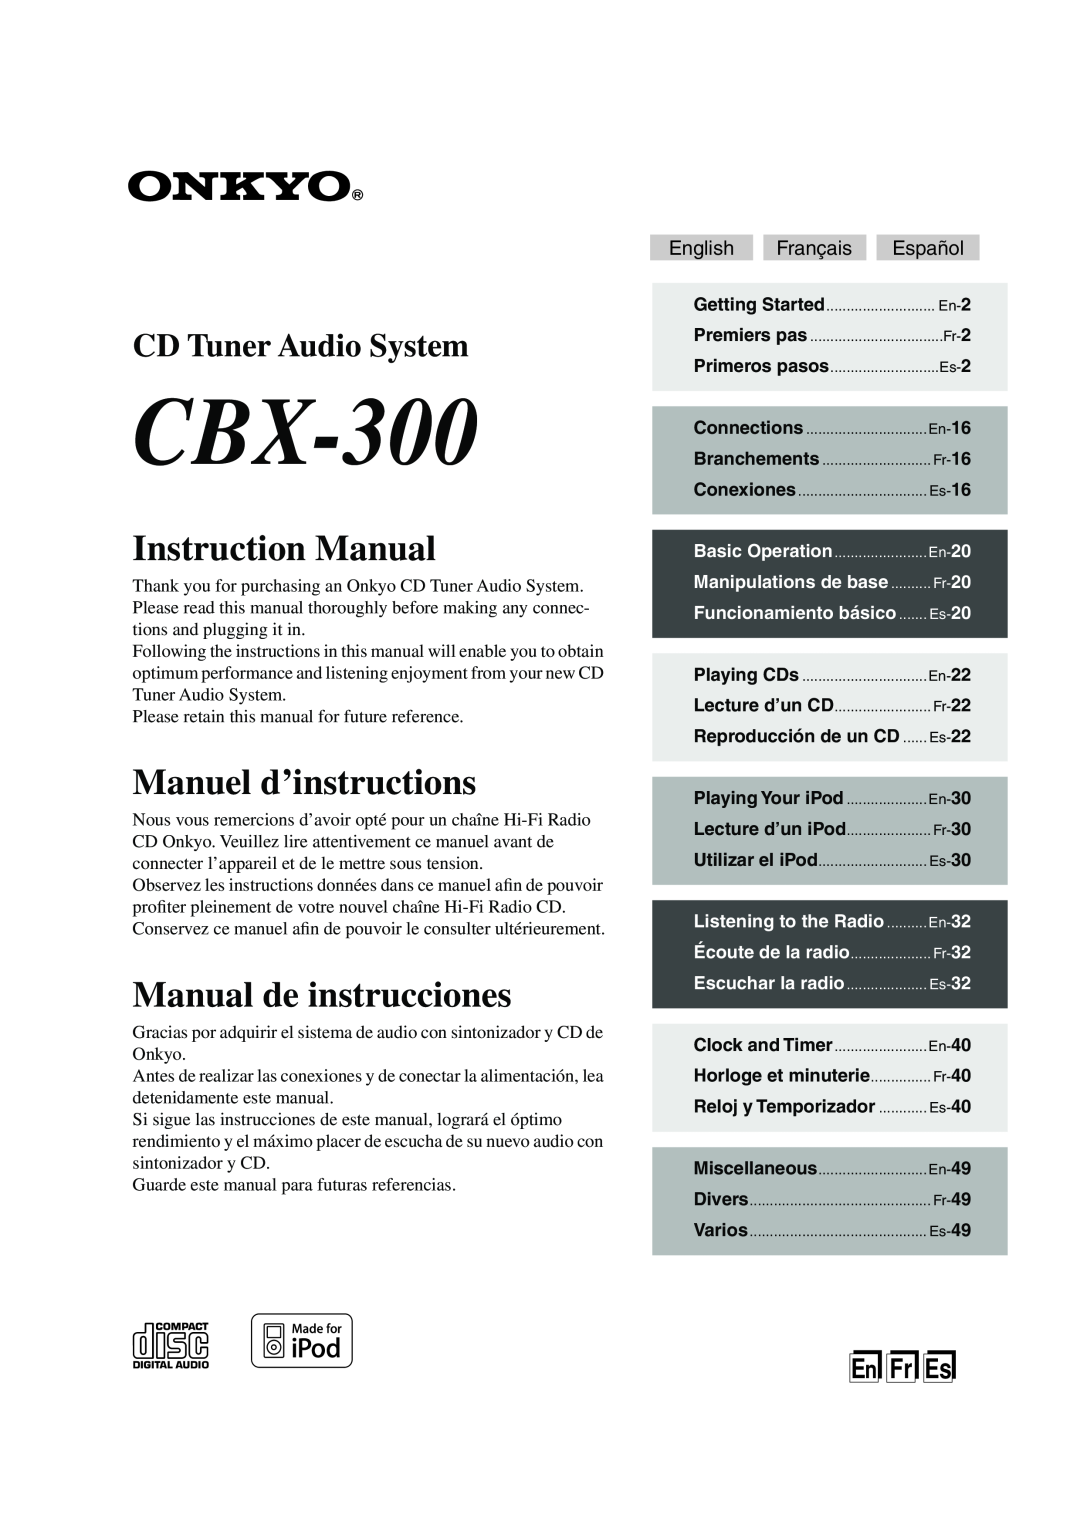 Onkyo CBX-300 instruction manual English, Français, Español, Manipulations de base, Funcionamiento básico, EnFr Es 